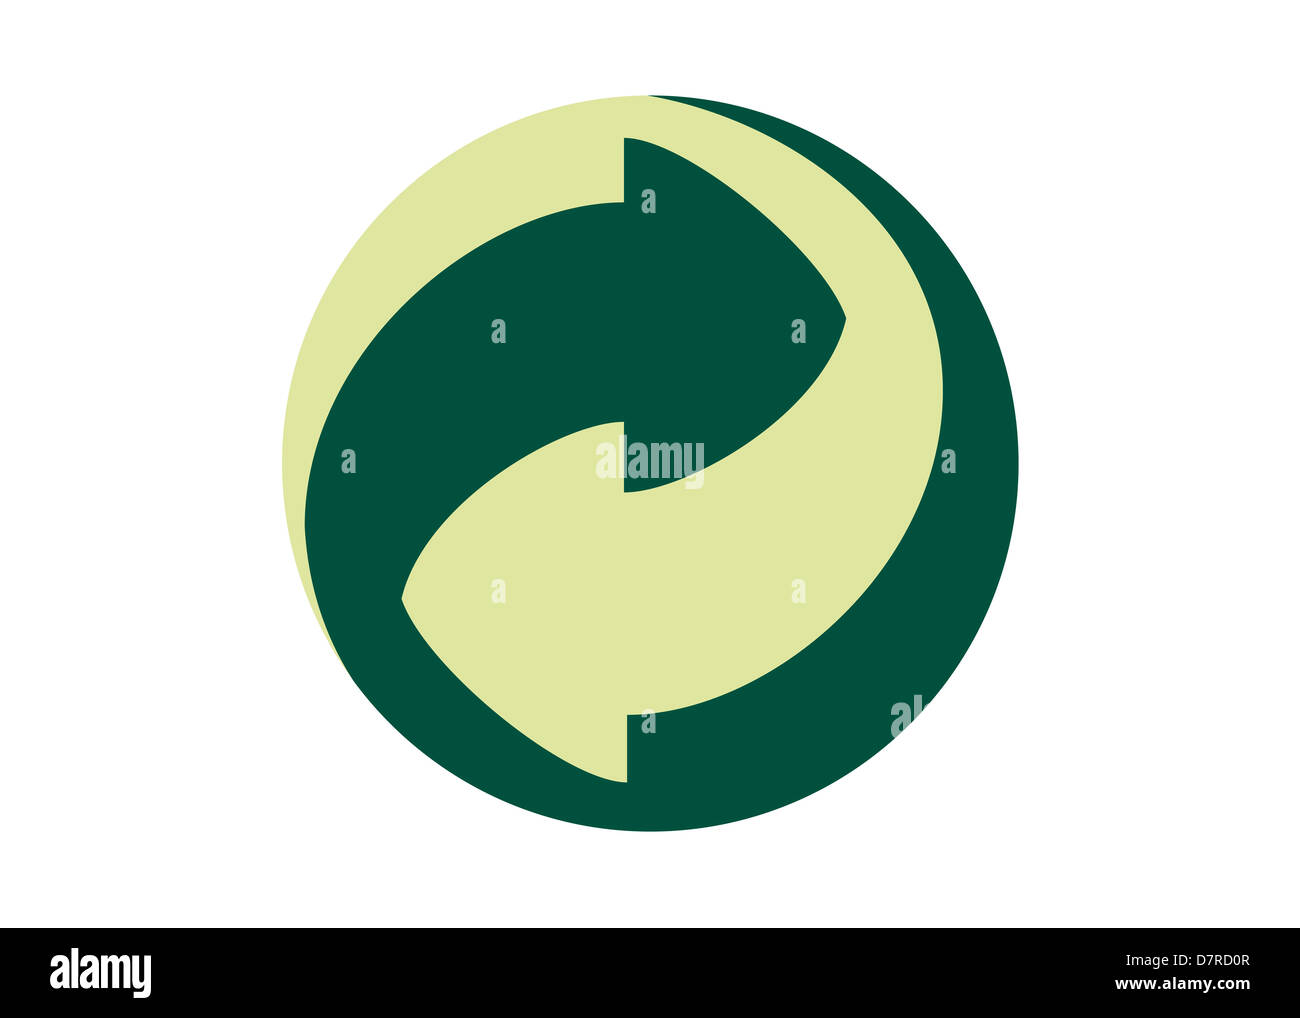 Der Grüne Grune Punkt logo icon flag symbol Stock Photo